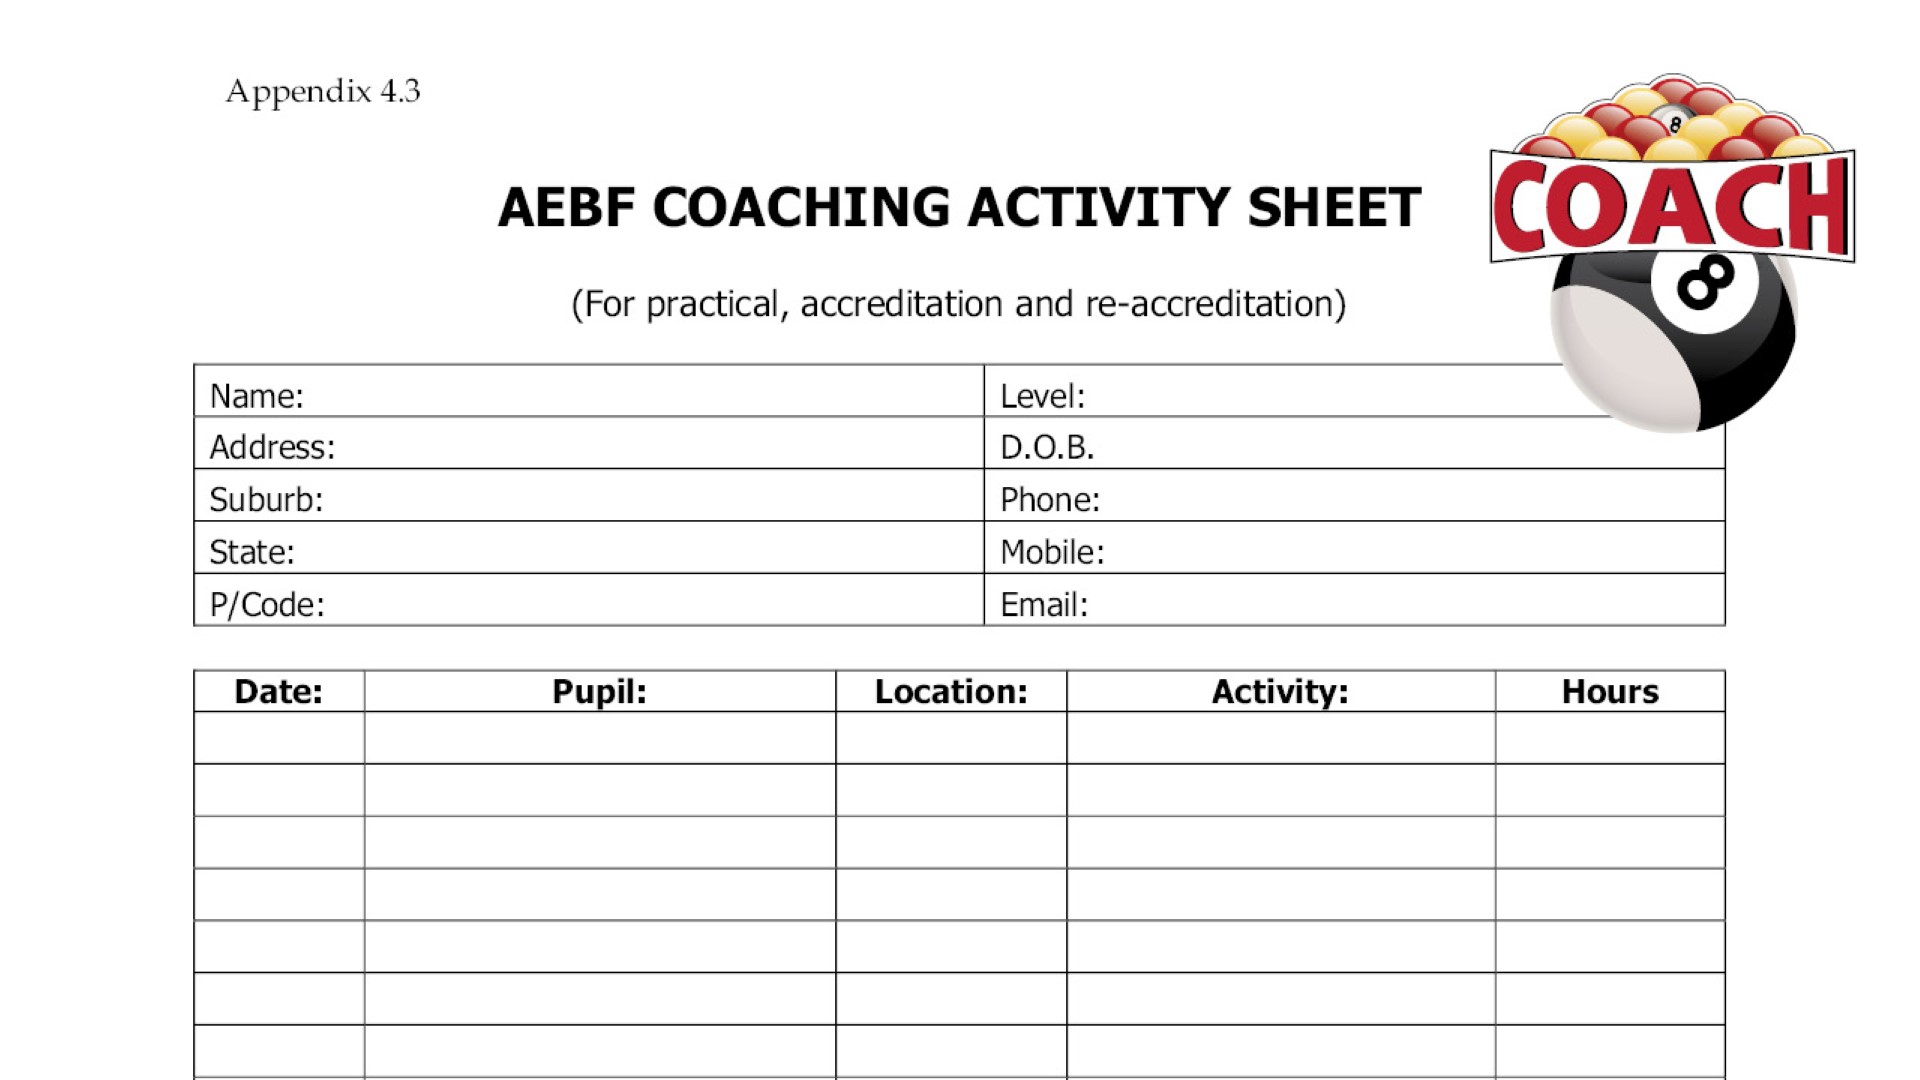 8 ball coach accreditation activity sheet 1